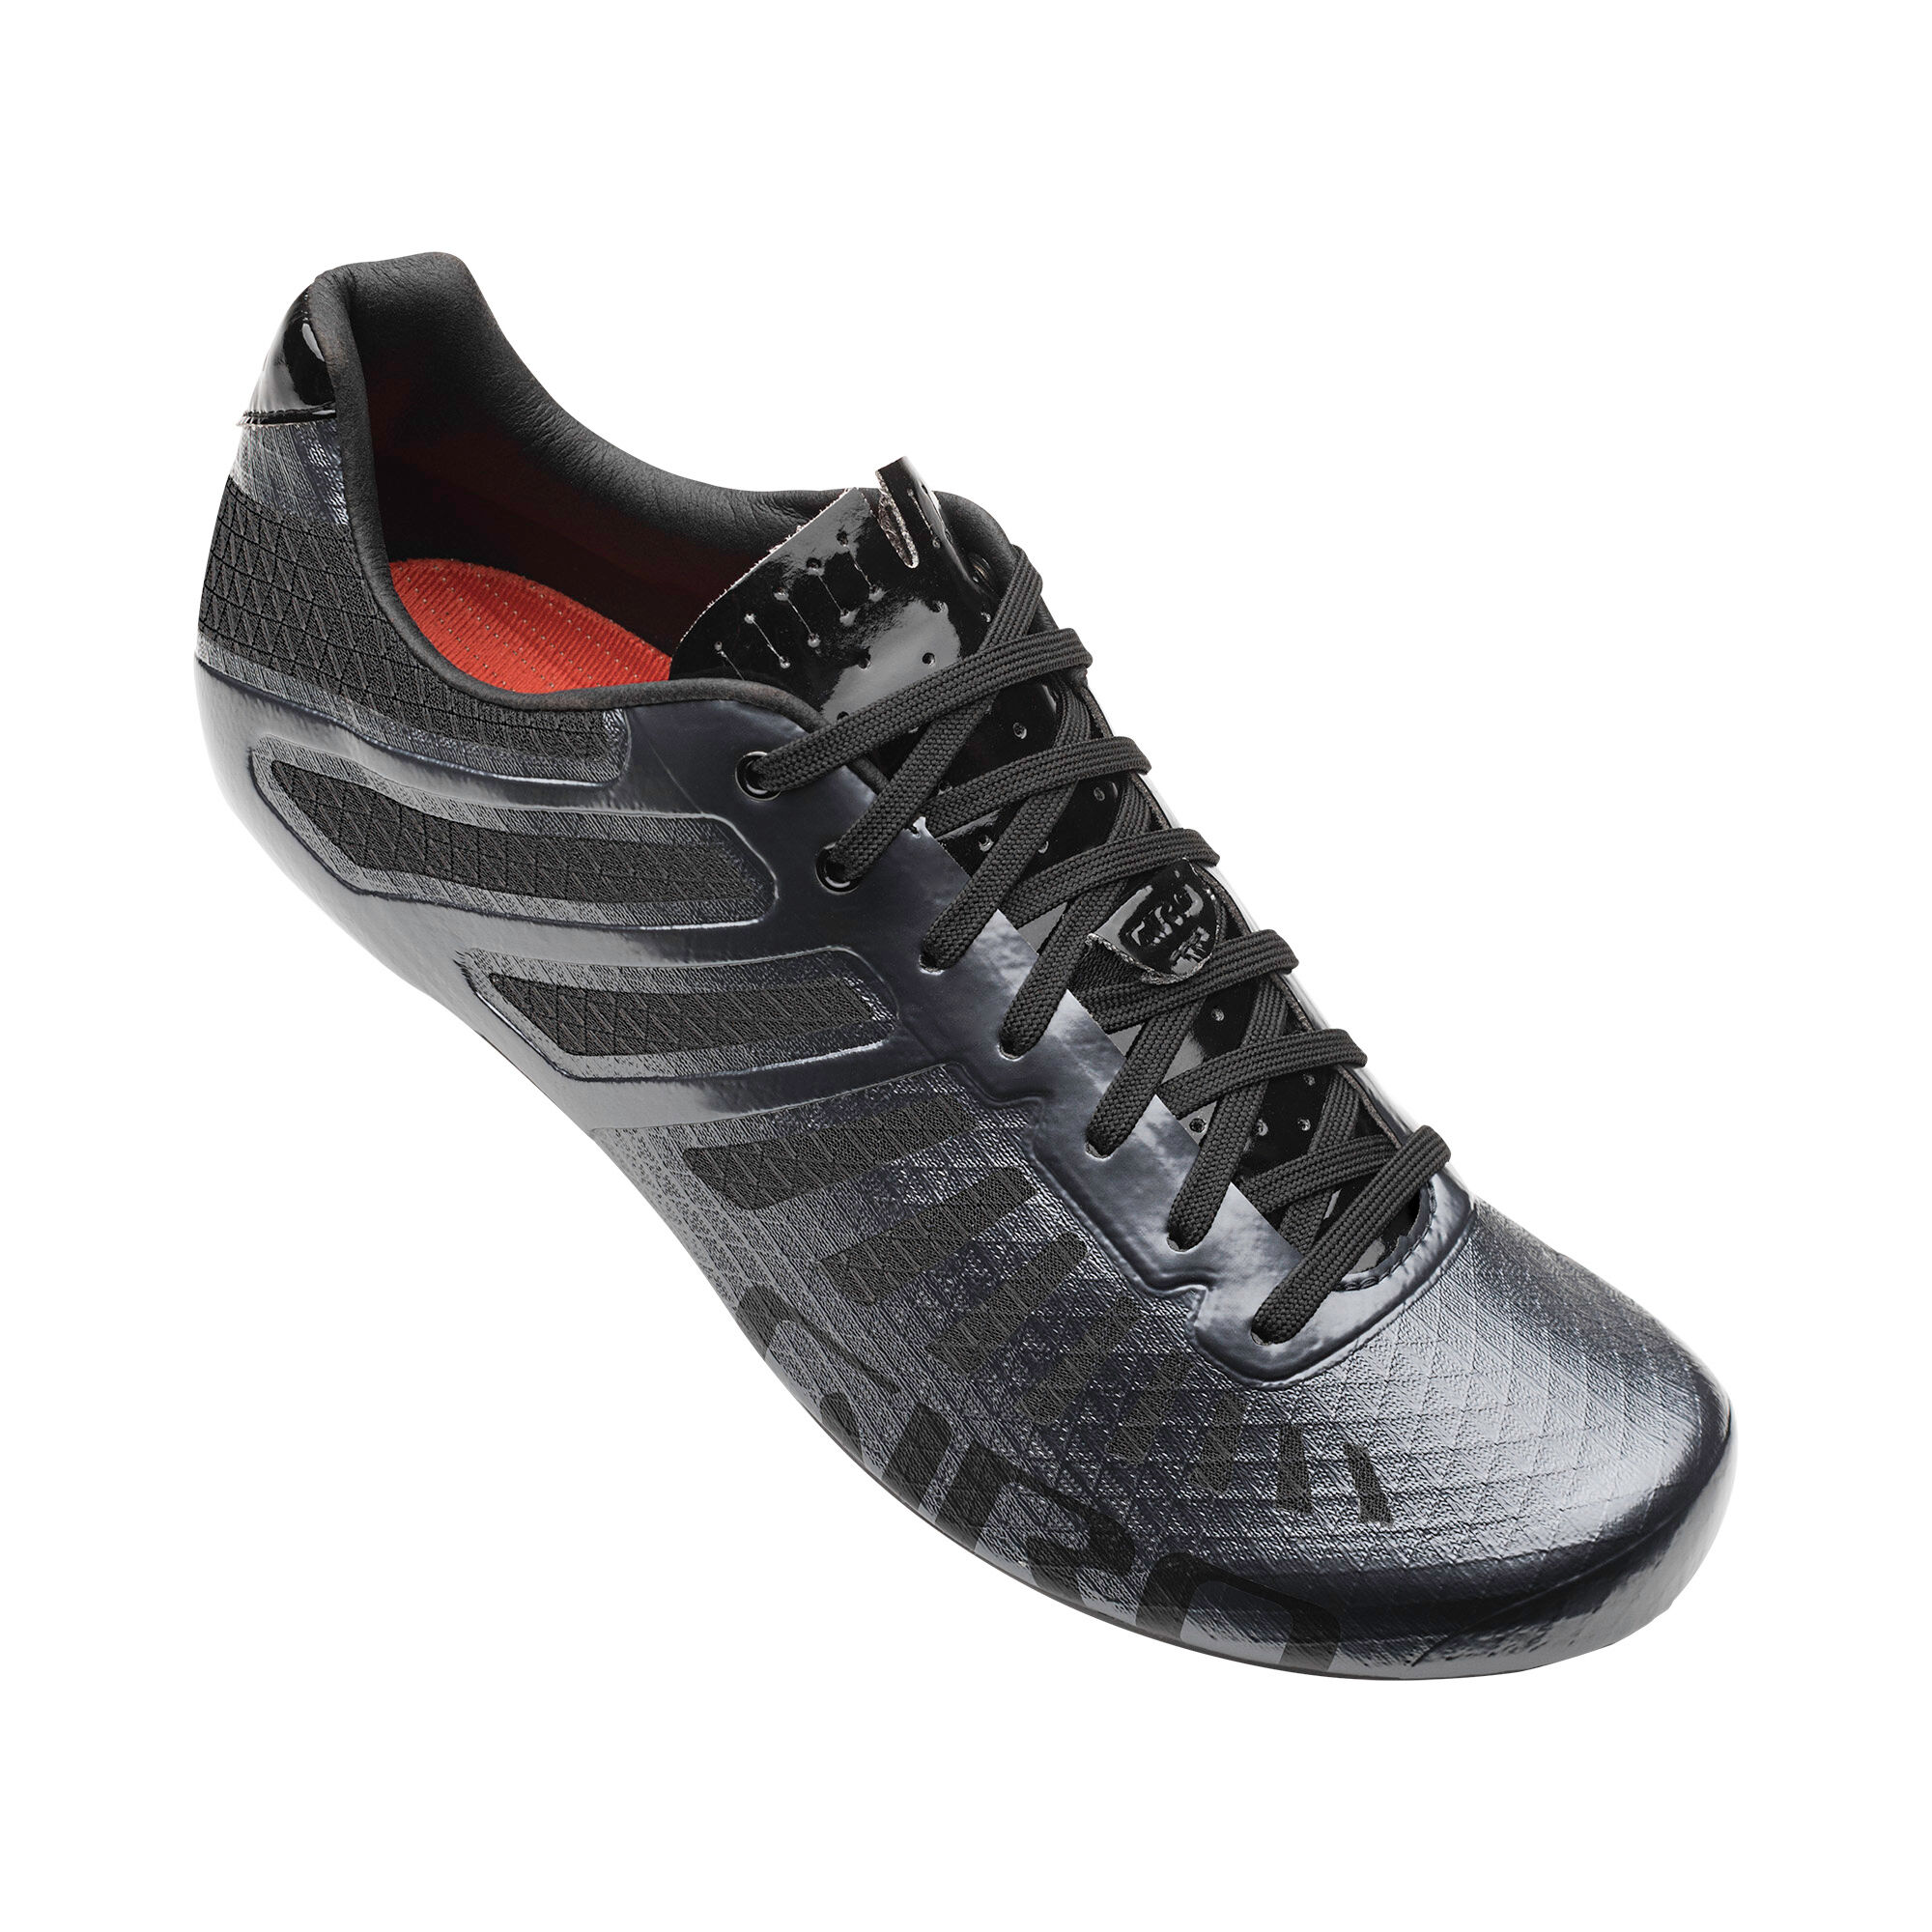 Giro Empire SLX - Cycling shoes - Men's